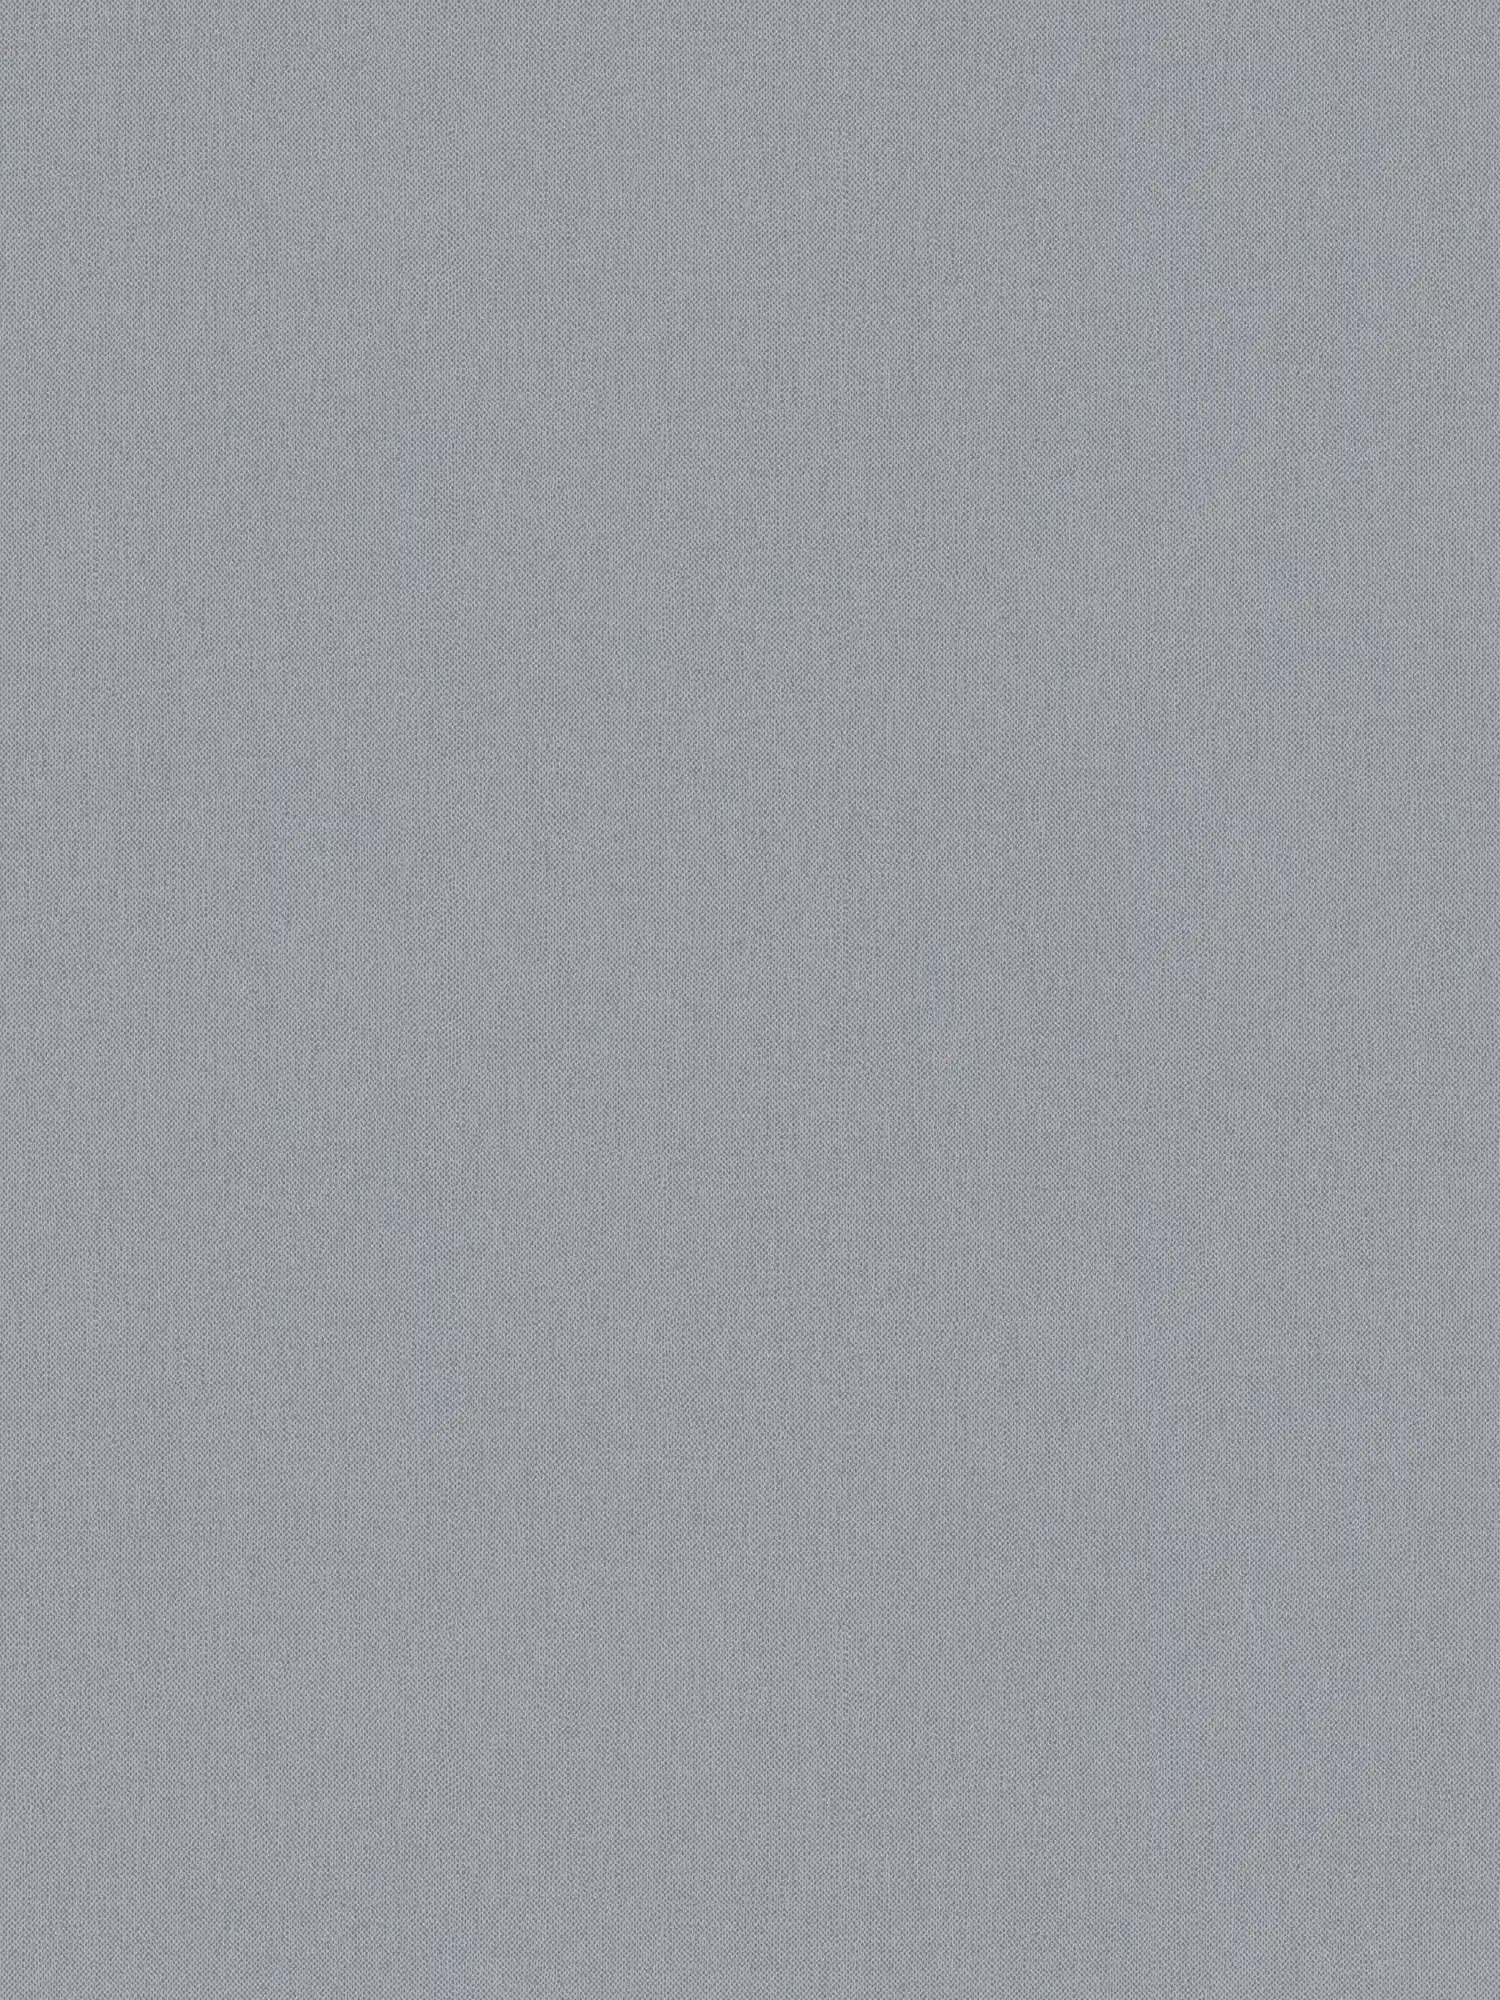 Linen look wallpaper grey with fabric texture & matte surface
